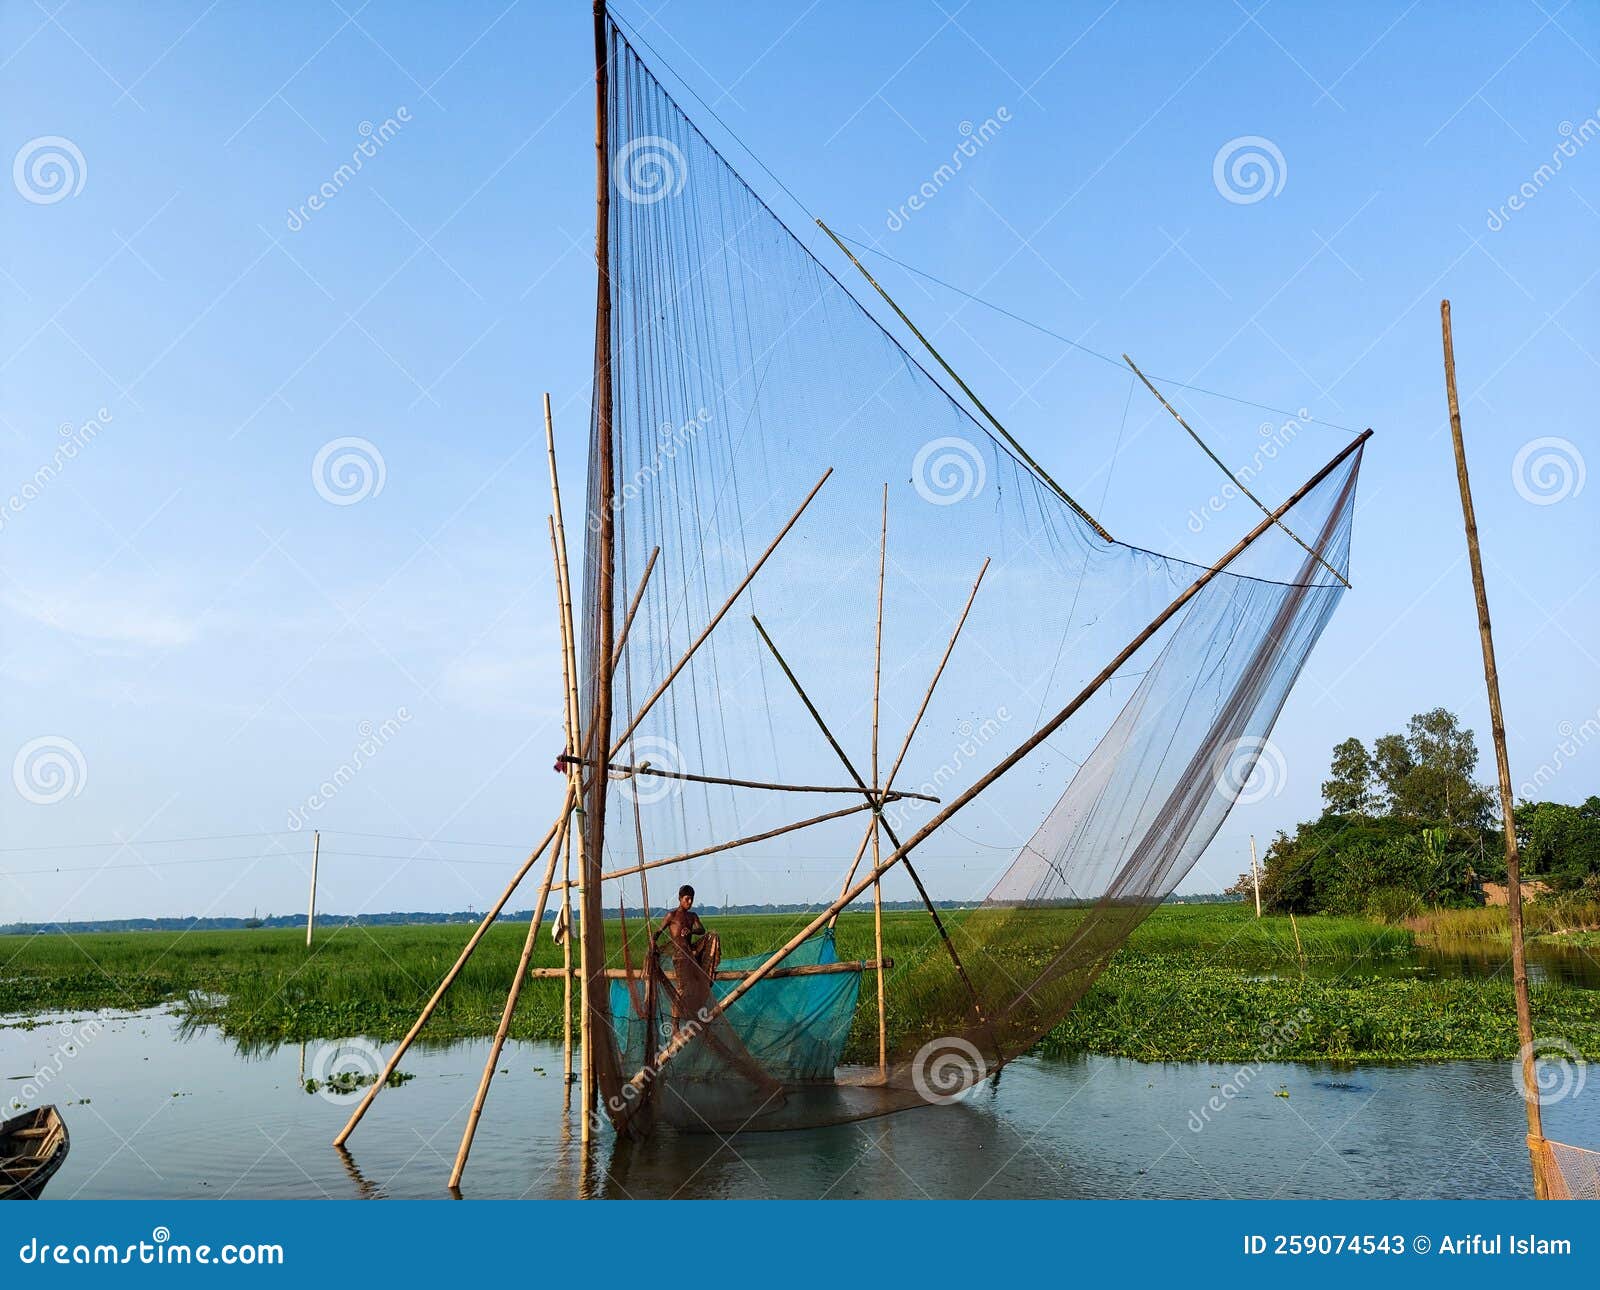 https://thumbs.dreamstime.com/z/chinese-fishing-nets-khora-jal-chinese-fishing-nets-cheena-vala-type-stationary-lift-net-located-fort-pabna-259074543.jpg